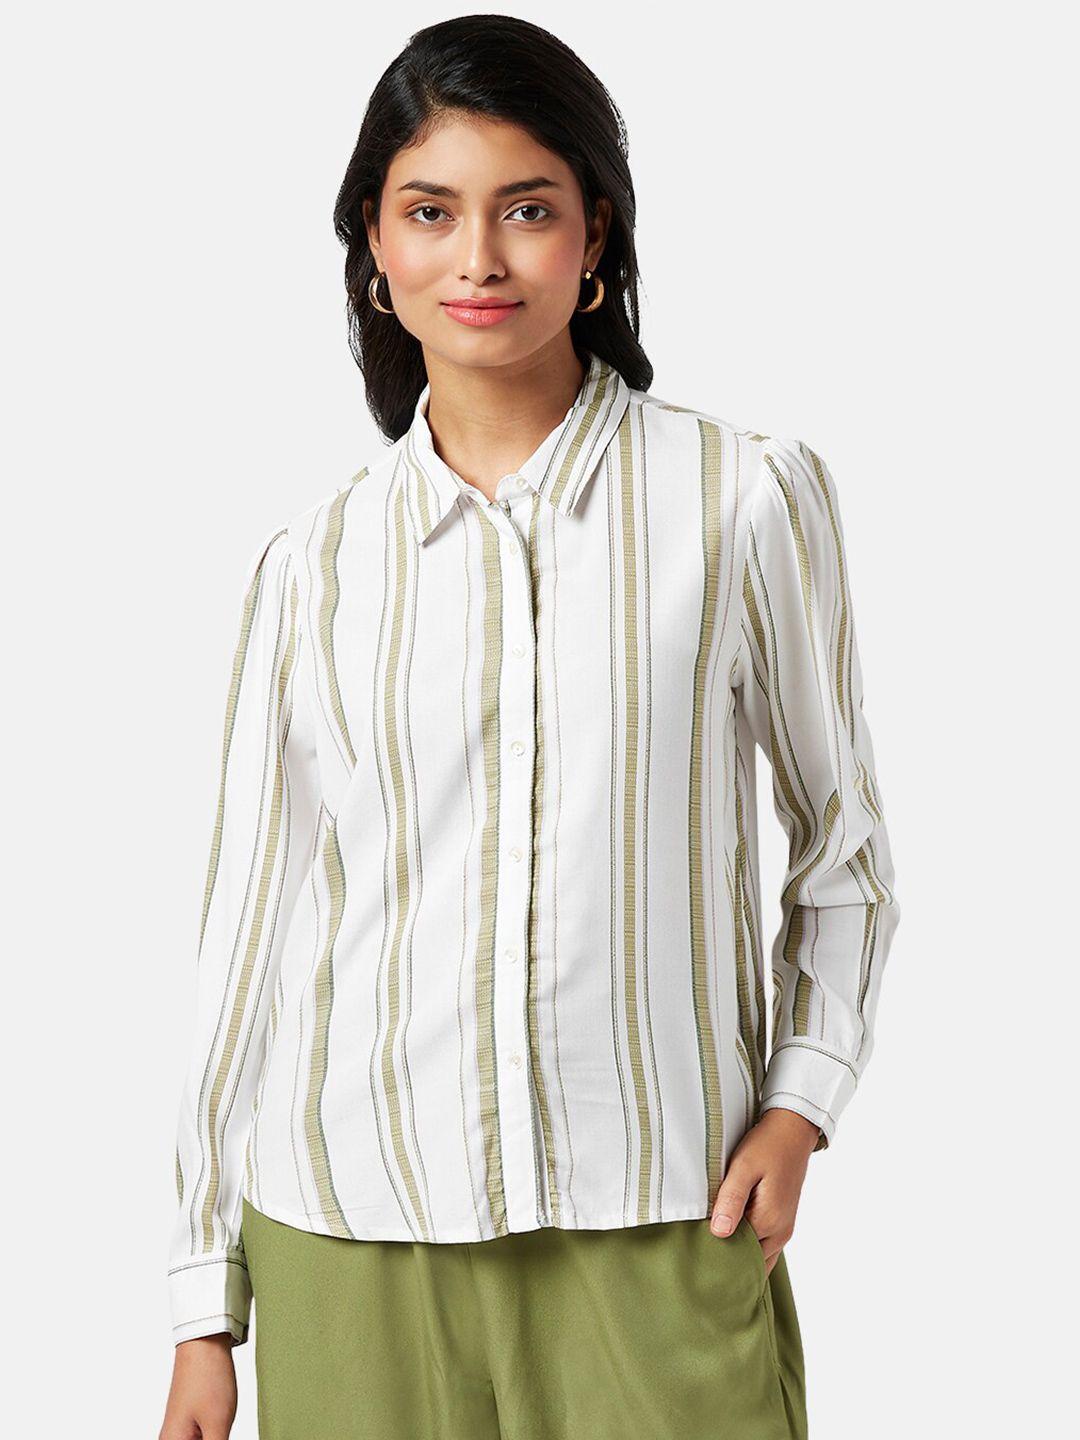 honey by pantaloons women striped casual shirt